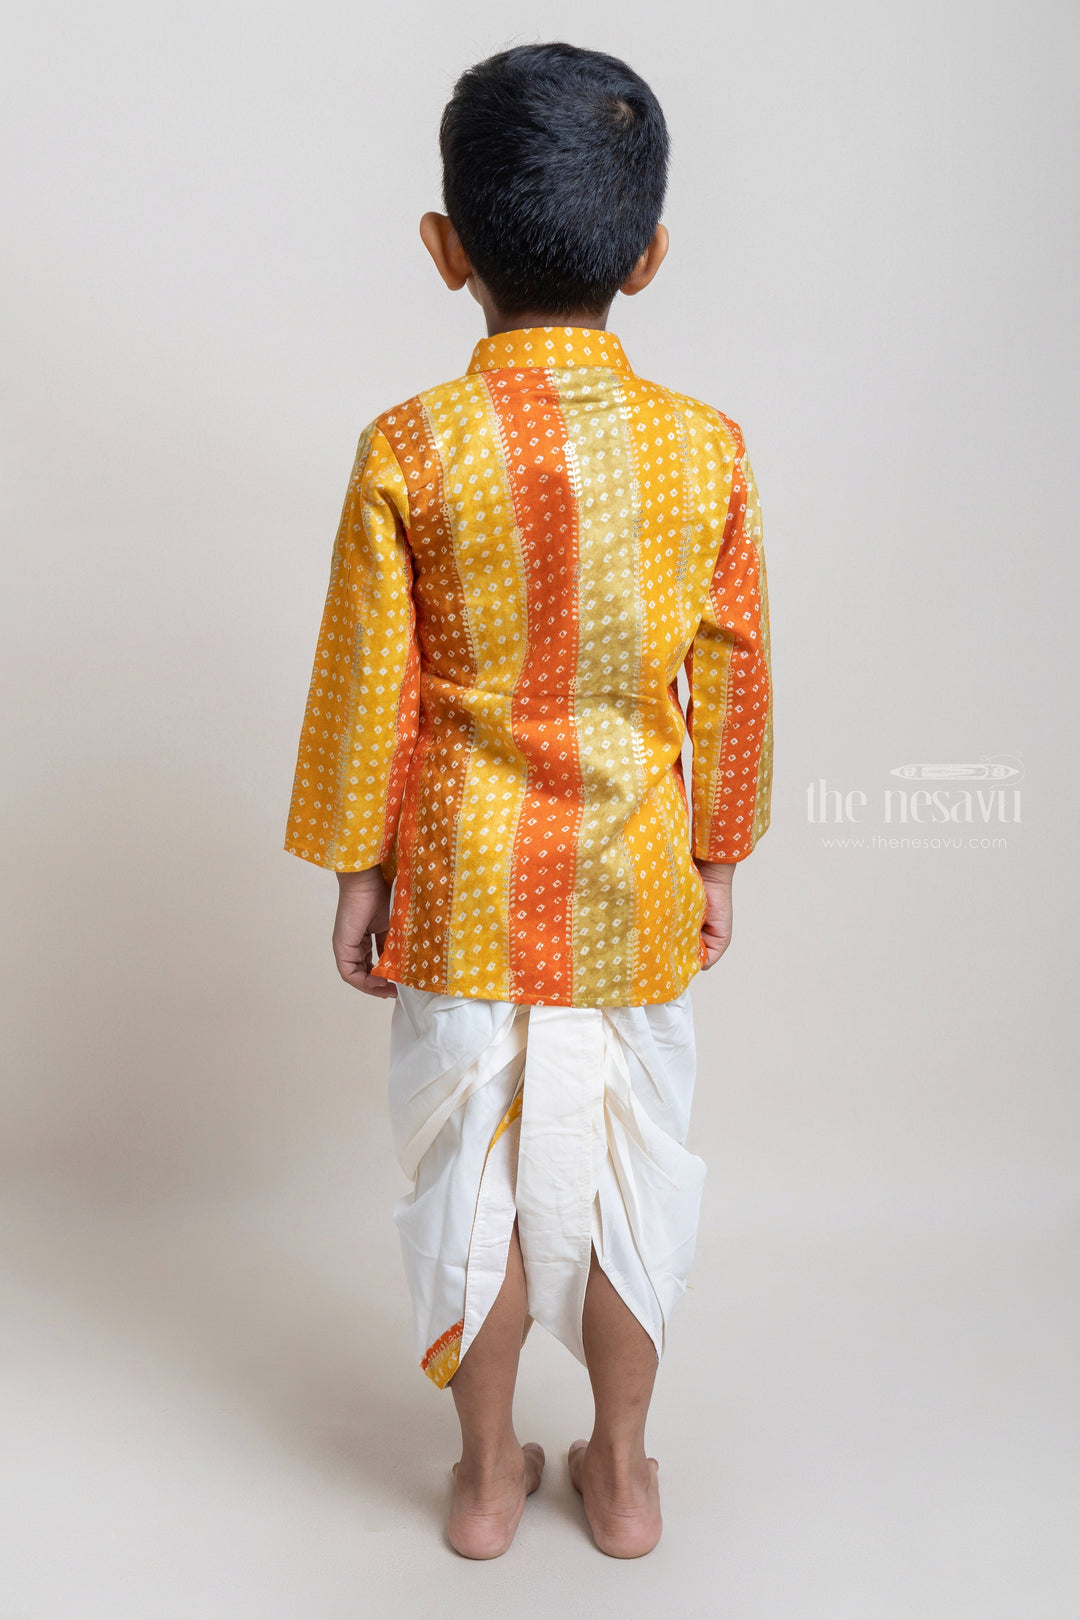 The Nesavu Boys Dothi Set Stylish Multi-colored Ethnic Kurta With White Dhoti For Little Boys Nesavu Shop the Latest Ethnic Wear for Boys Online | Premium Kurta Set | The Nesauvu